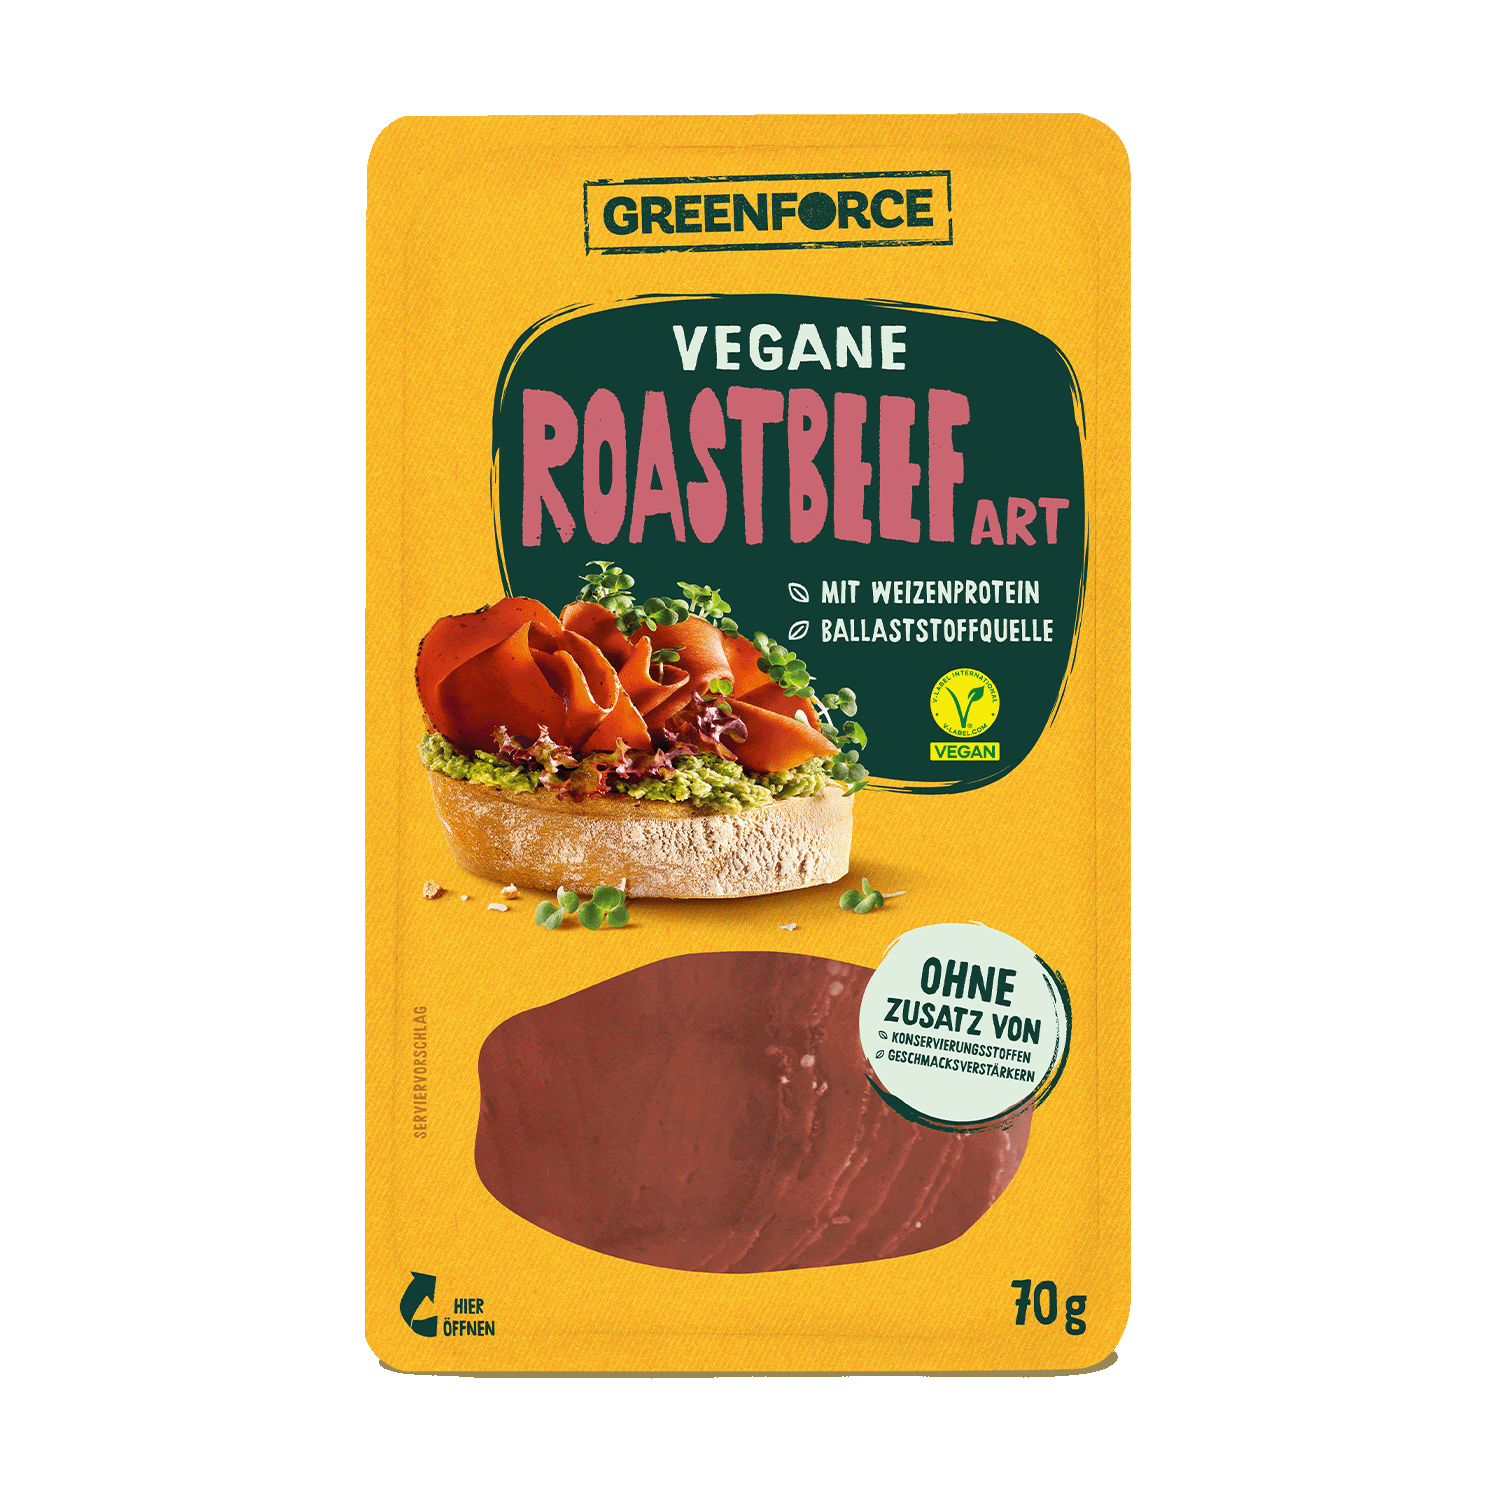 Veganer Aufschnitt Roastbeef Art, 70g